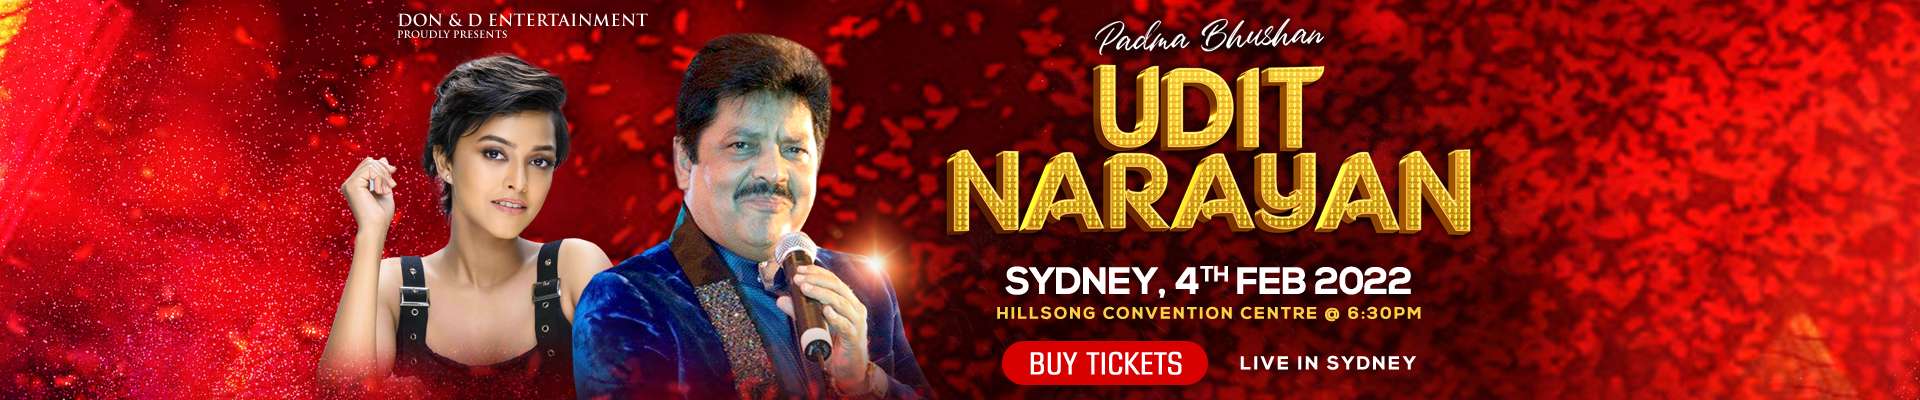 Padma Bhushan Udit Narayan Live In Grand Musical Concert Sydney